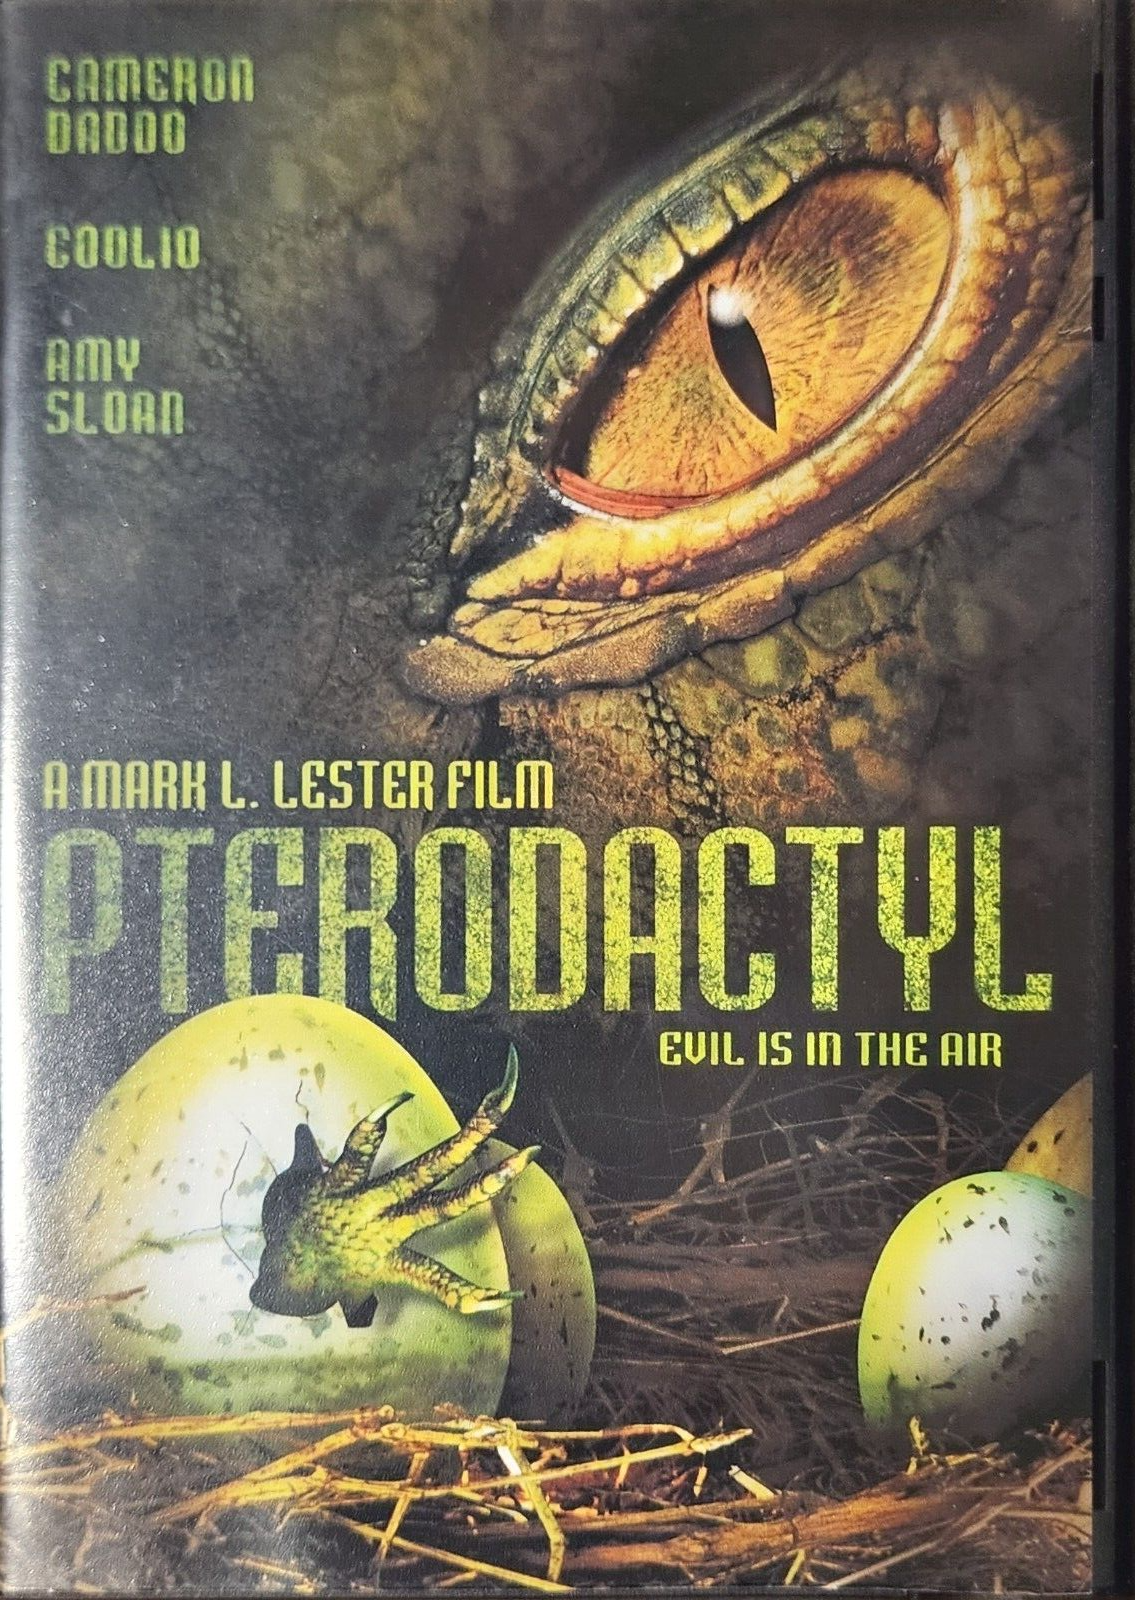 DVD FILME PTERODACTYL